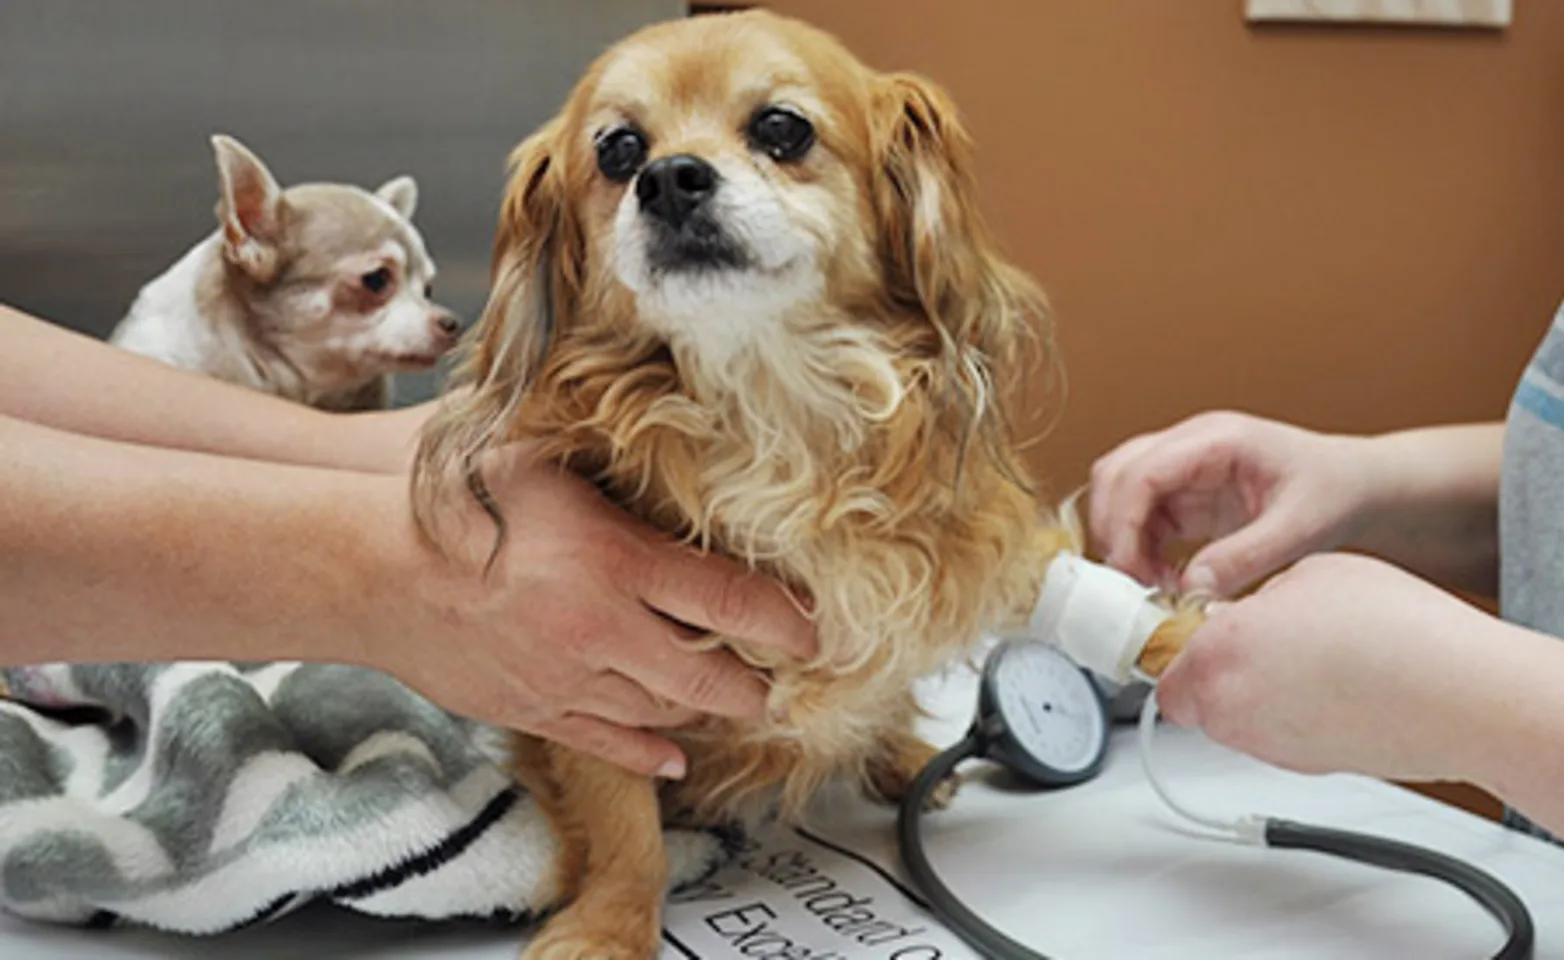 AECC staff examining dogs blood pressure